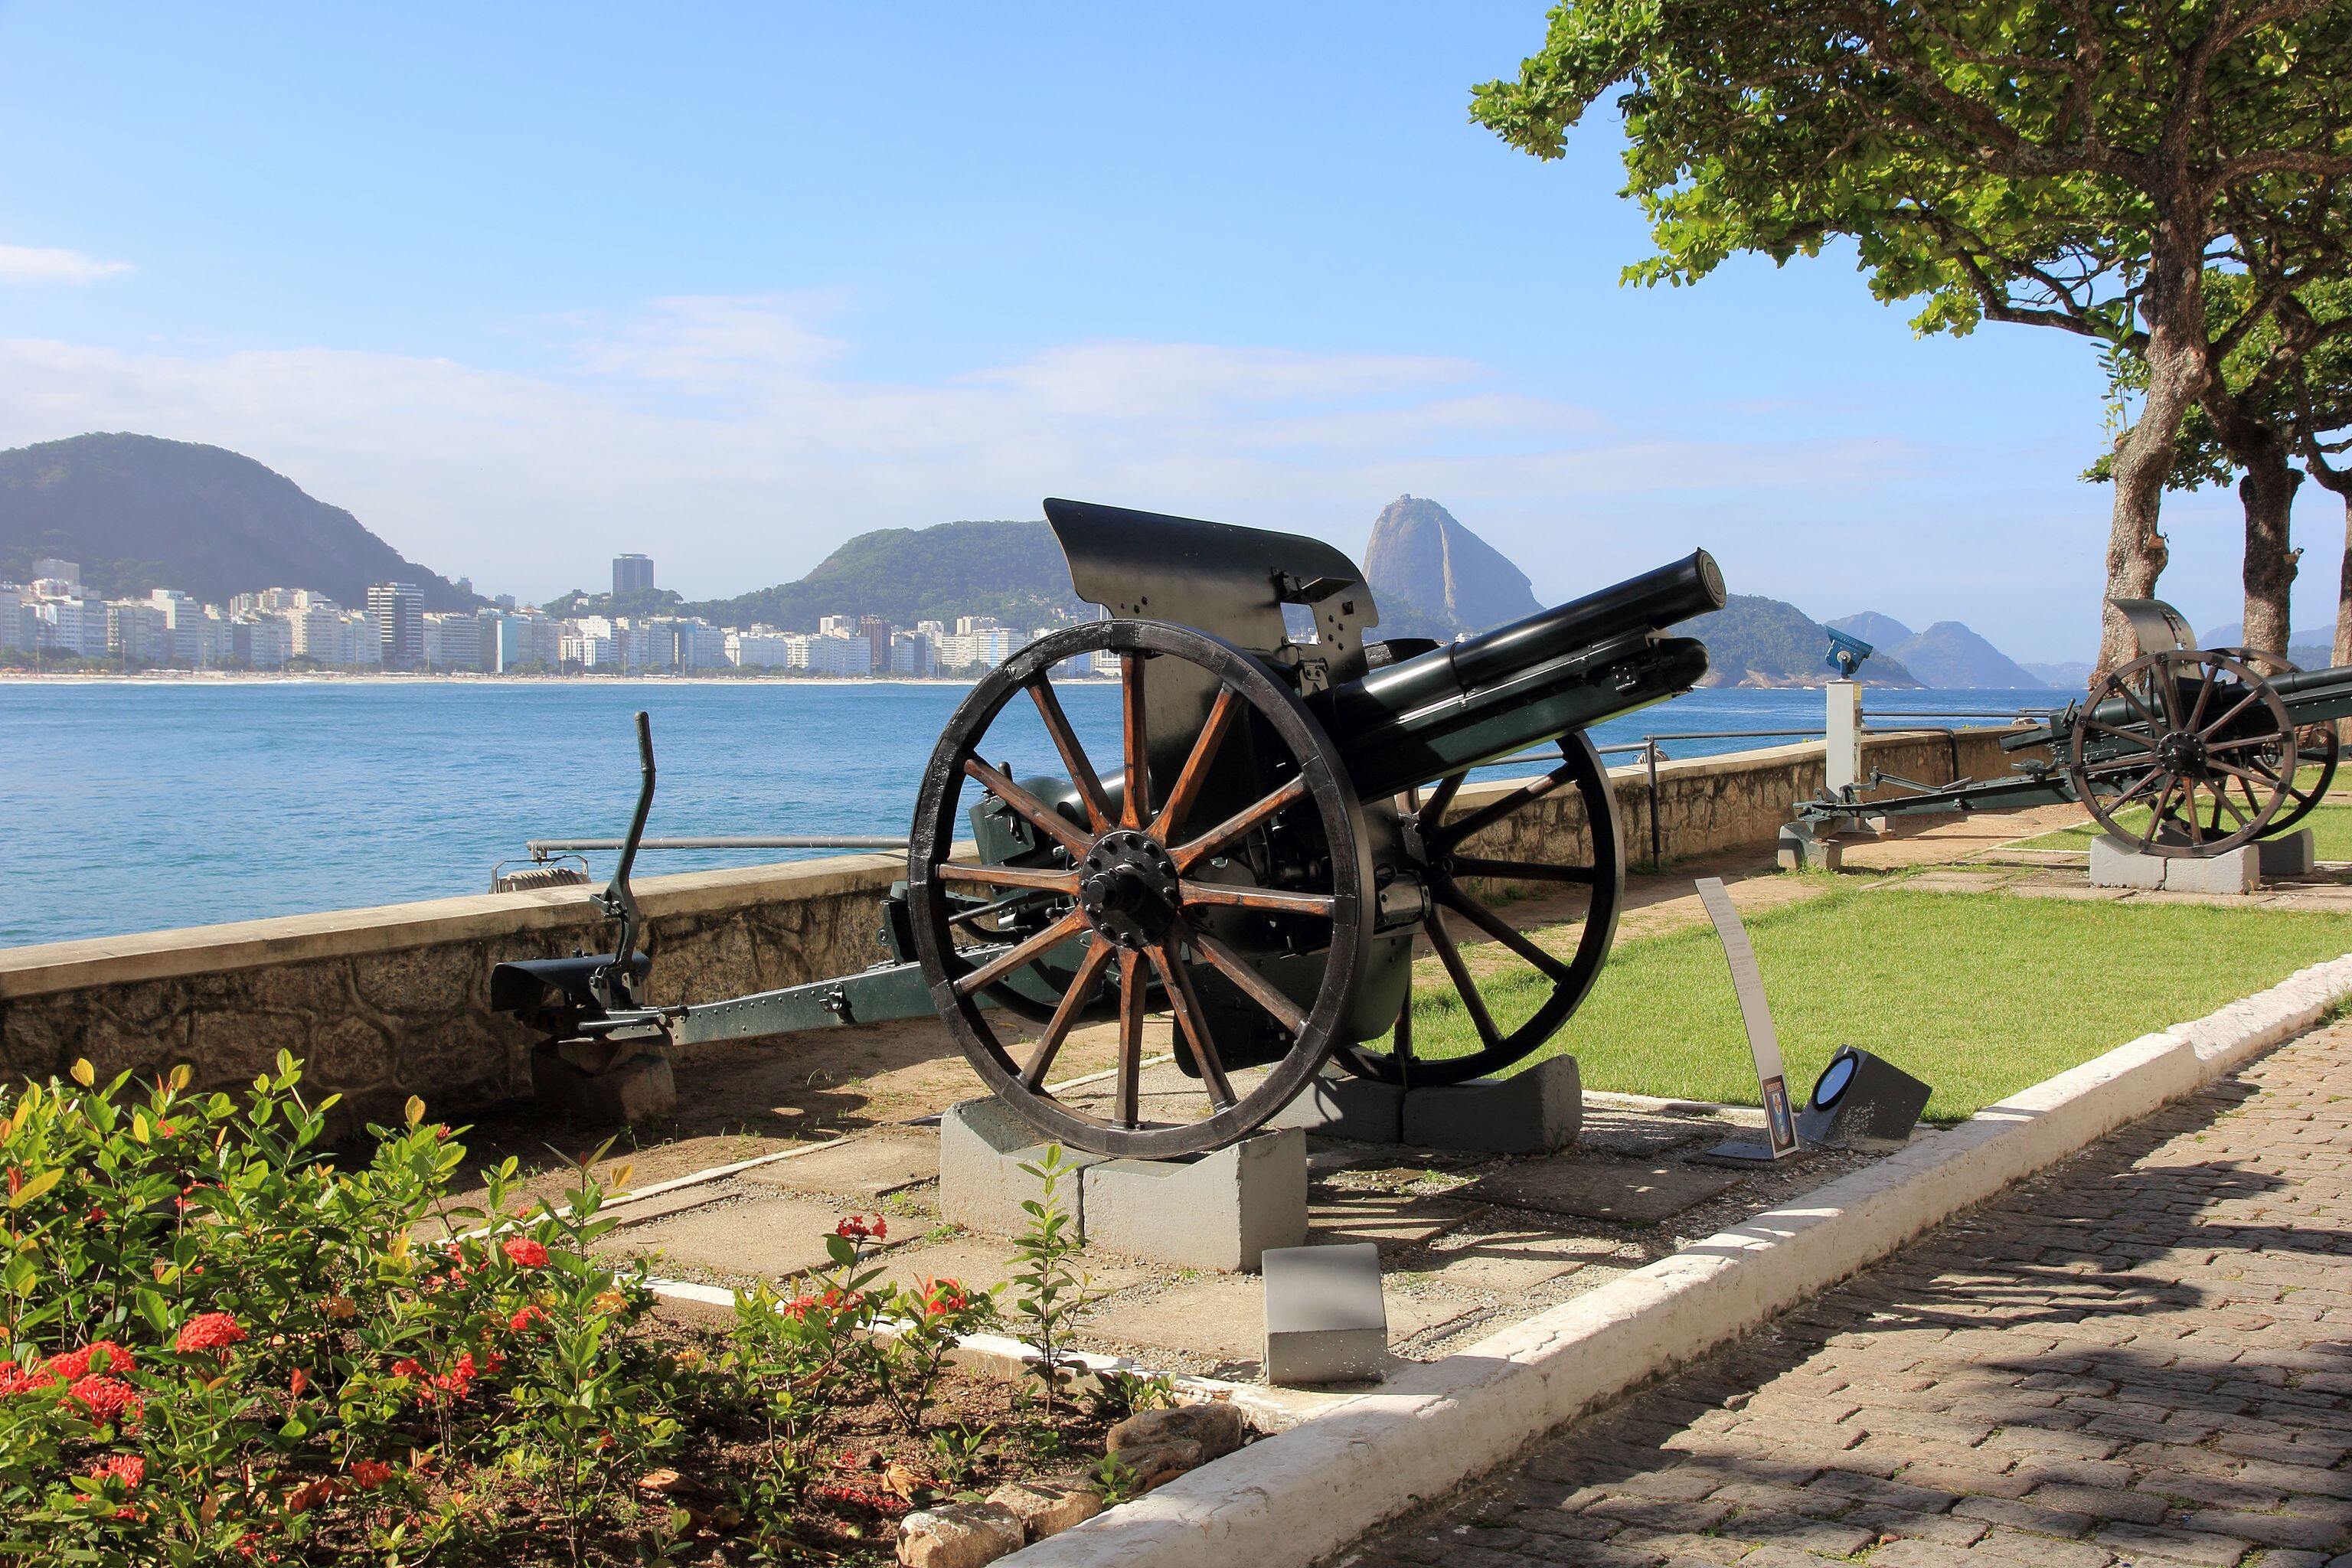 Forte de Copacabana